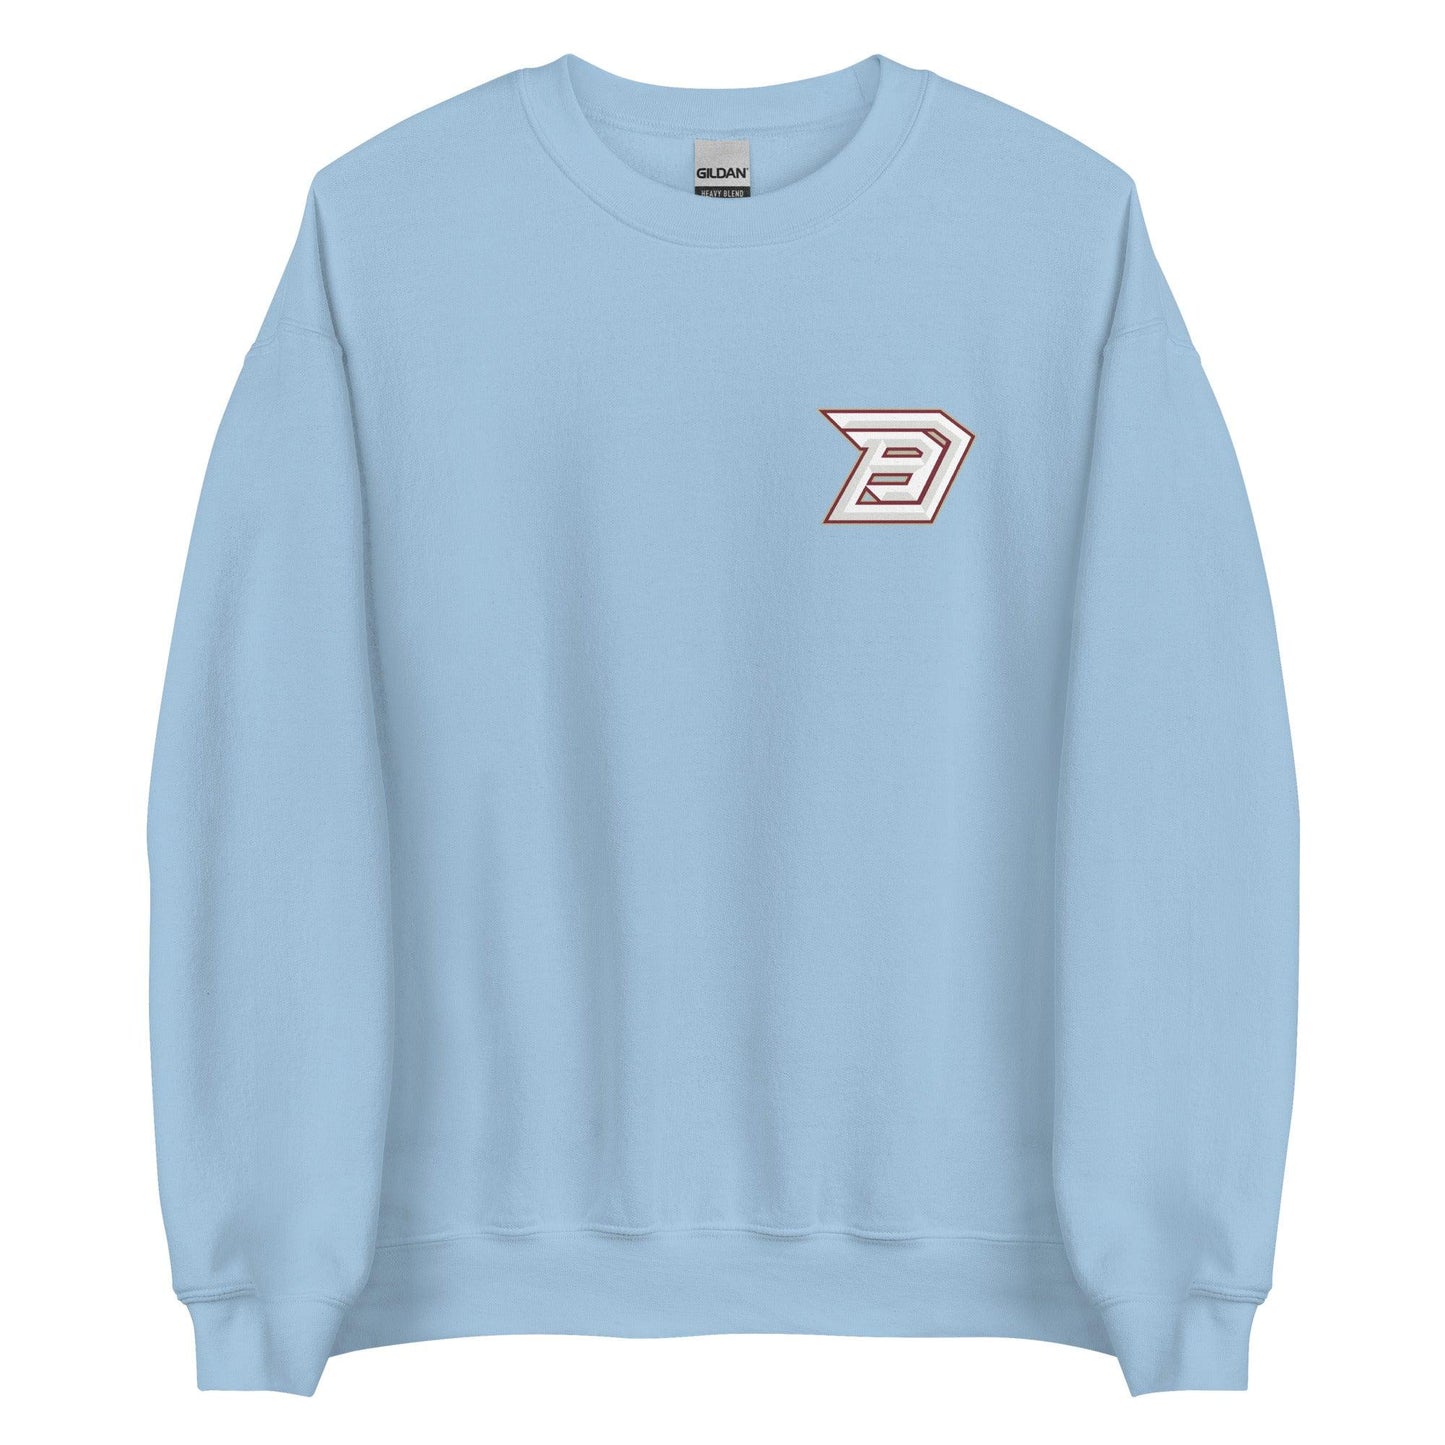 Daniel Brooks “Signature” Sweatshirt - Fan Arch